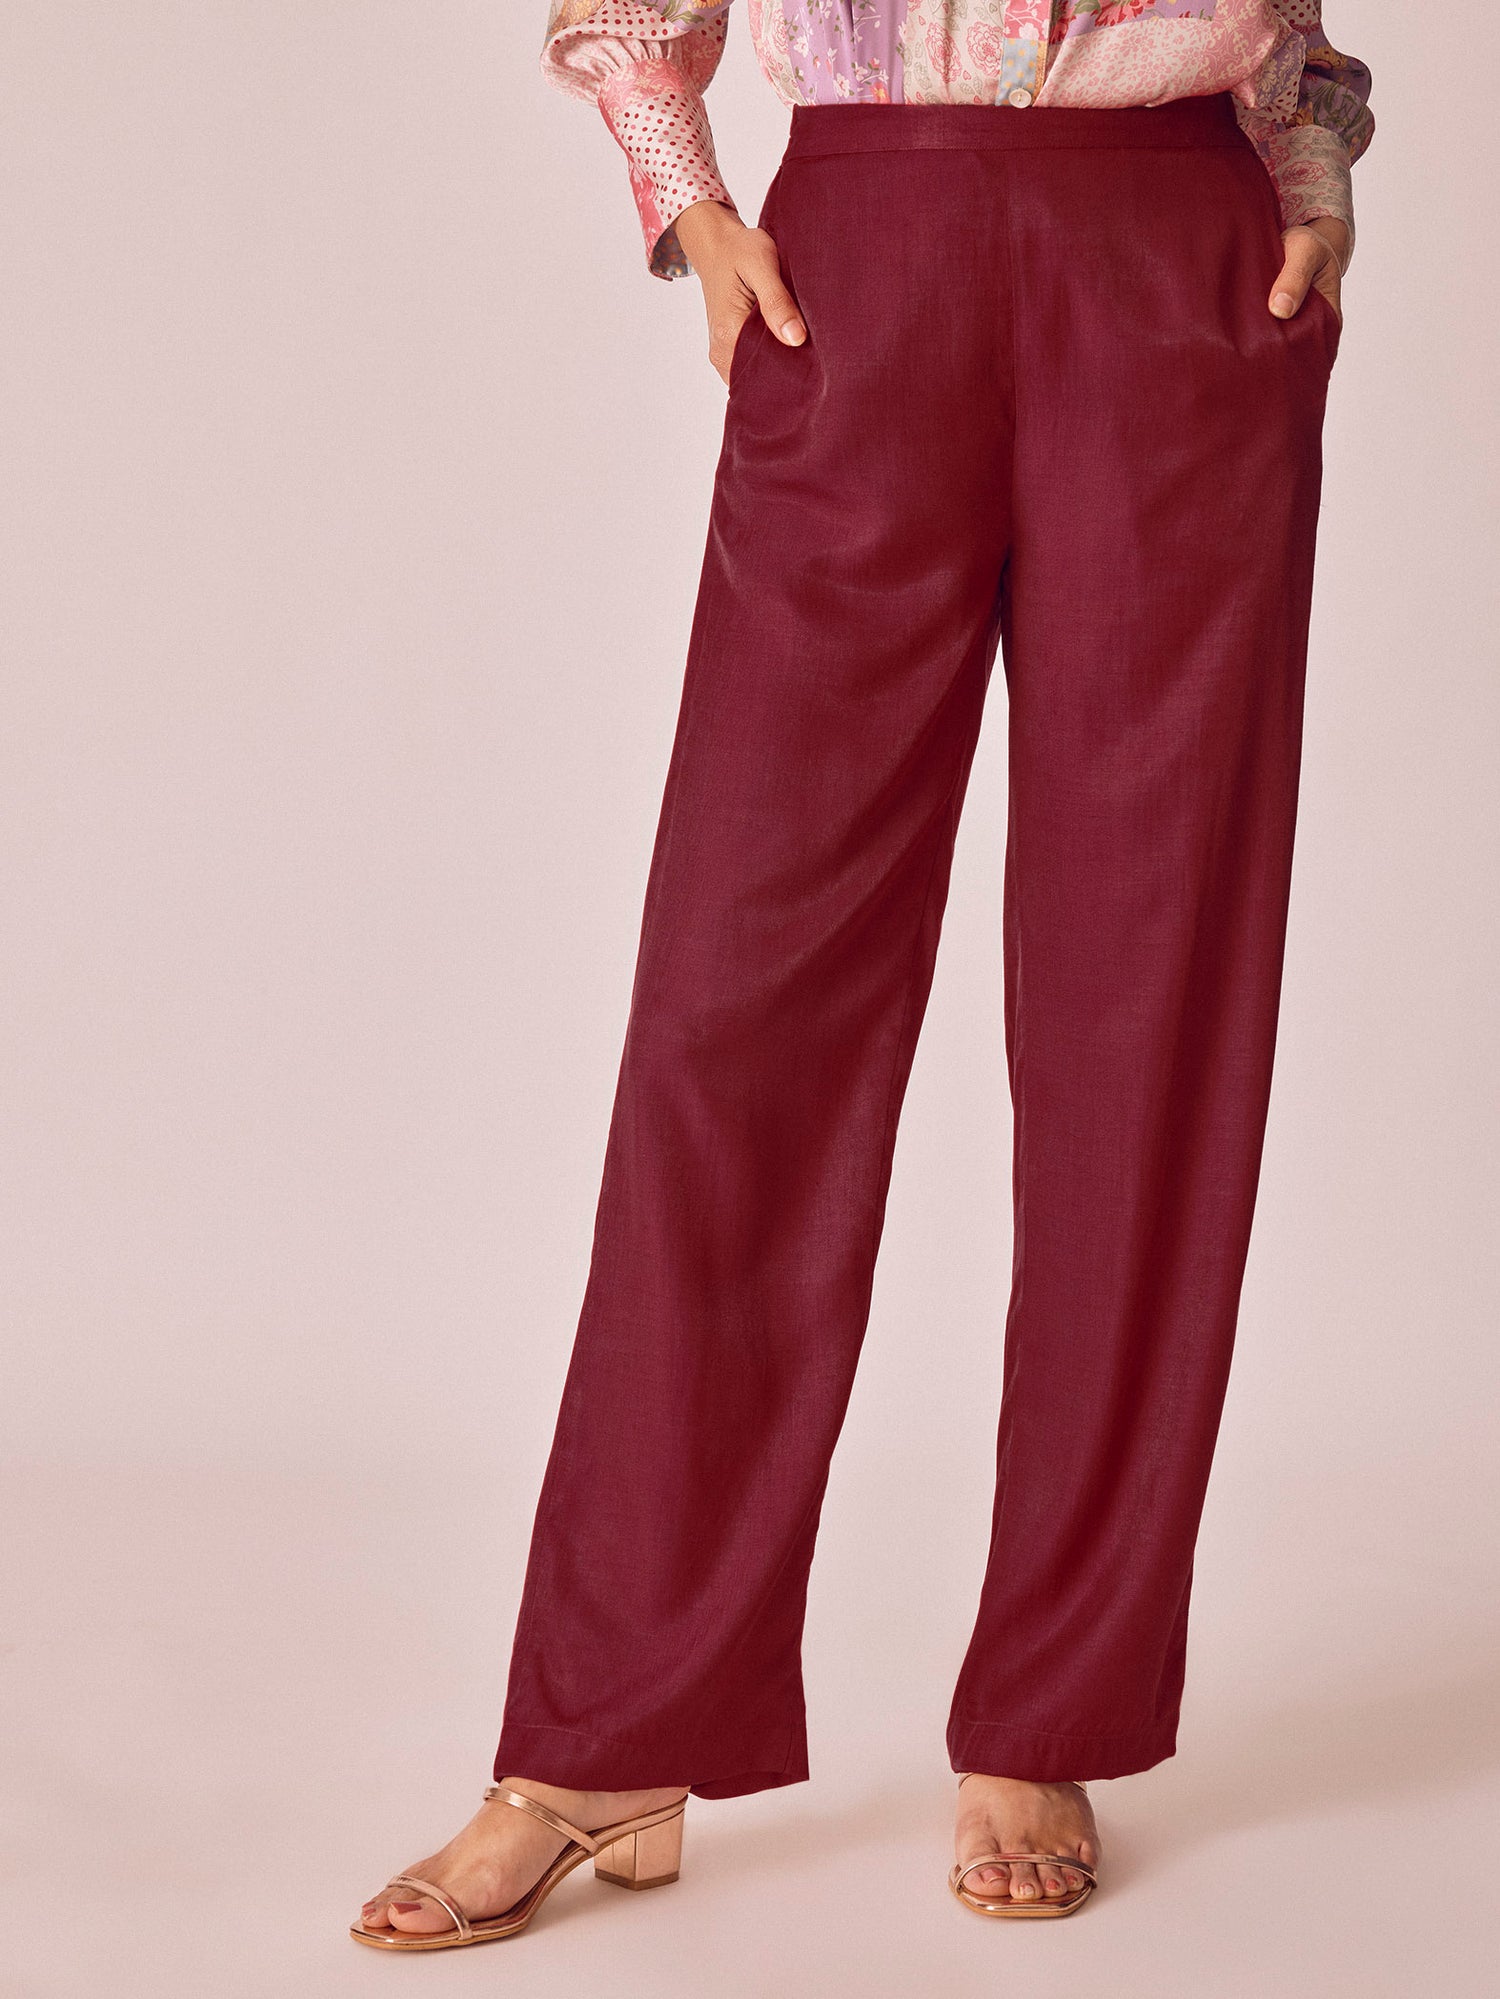 Cranberry Straight Fit Pants